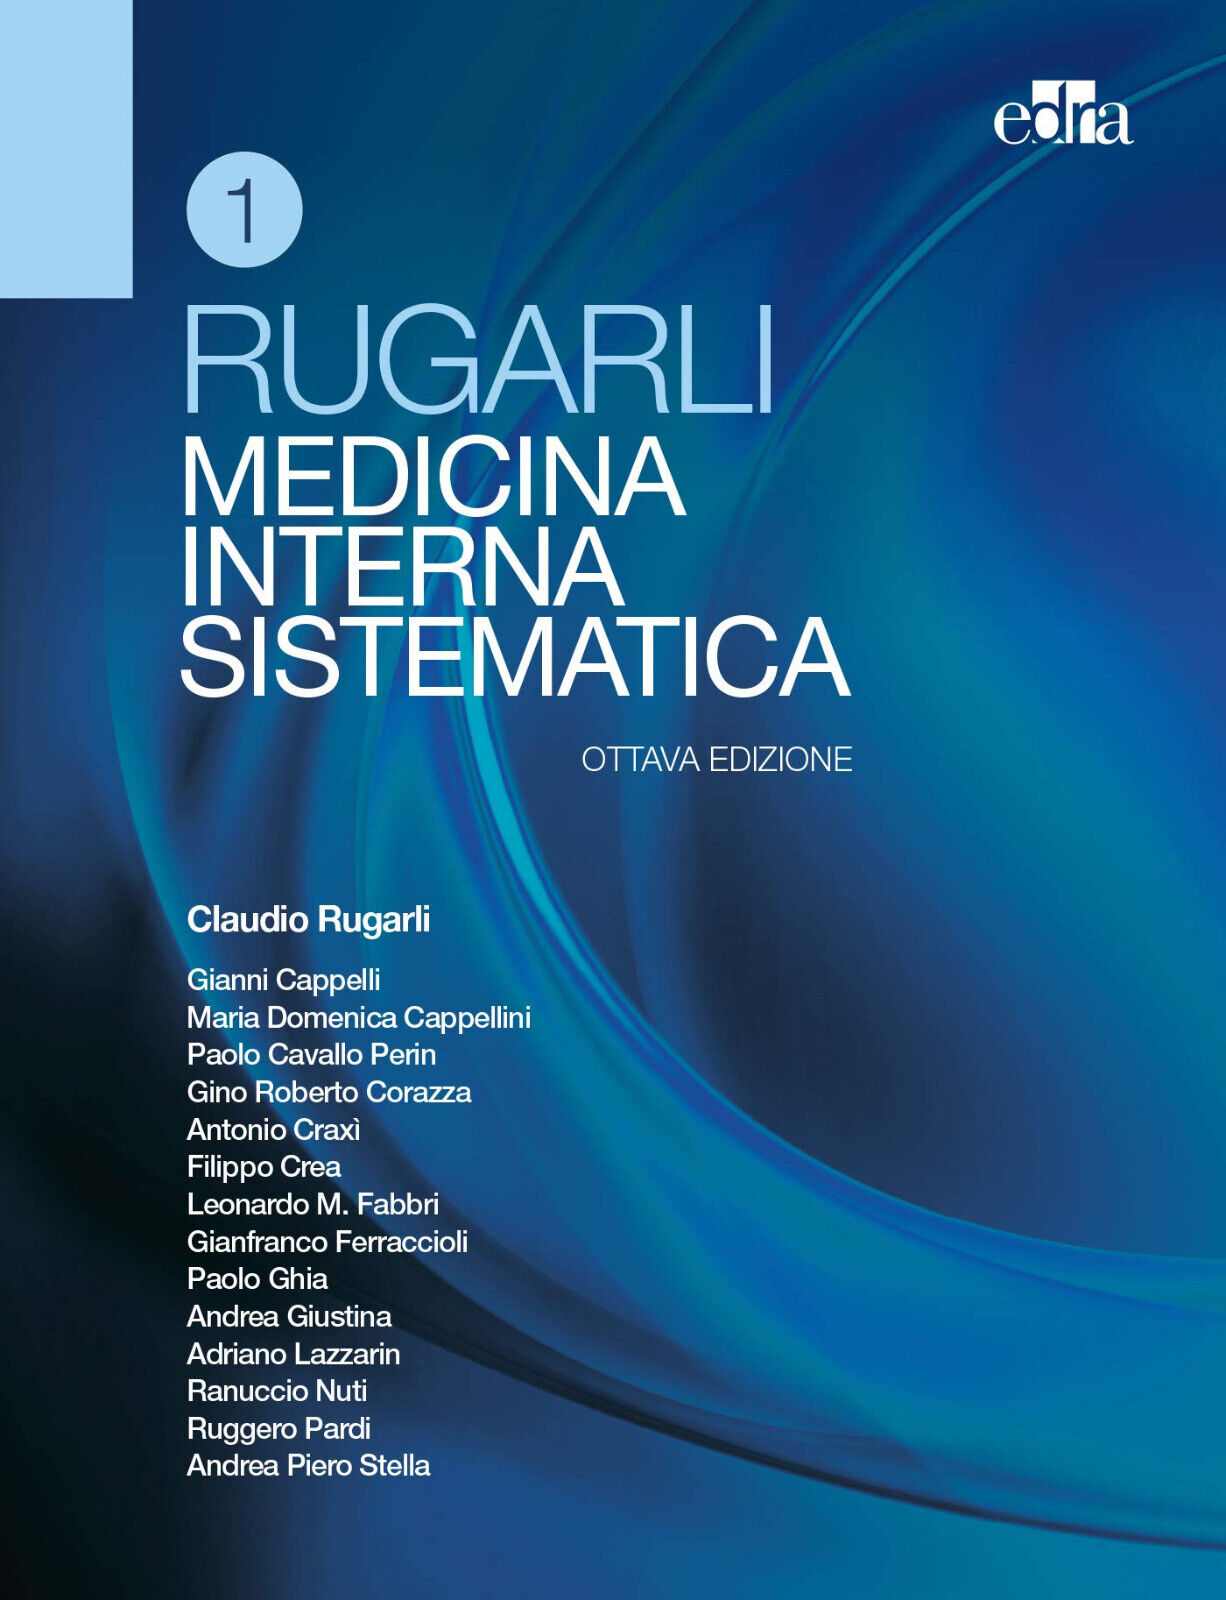 Rugarli. Medicina interna sistematica (2 volumi) - Claudio Rugarli - Edra, 2021